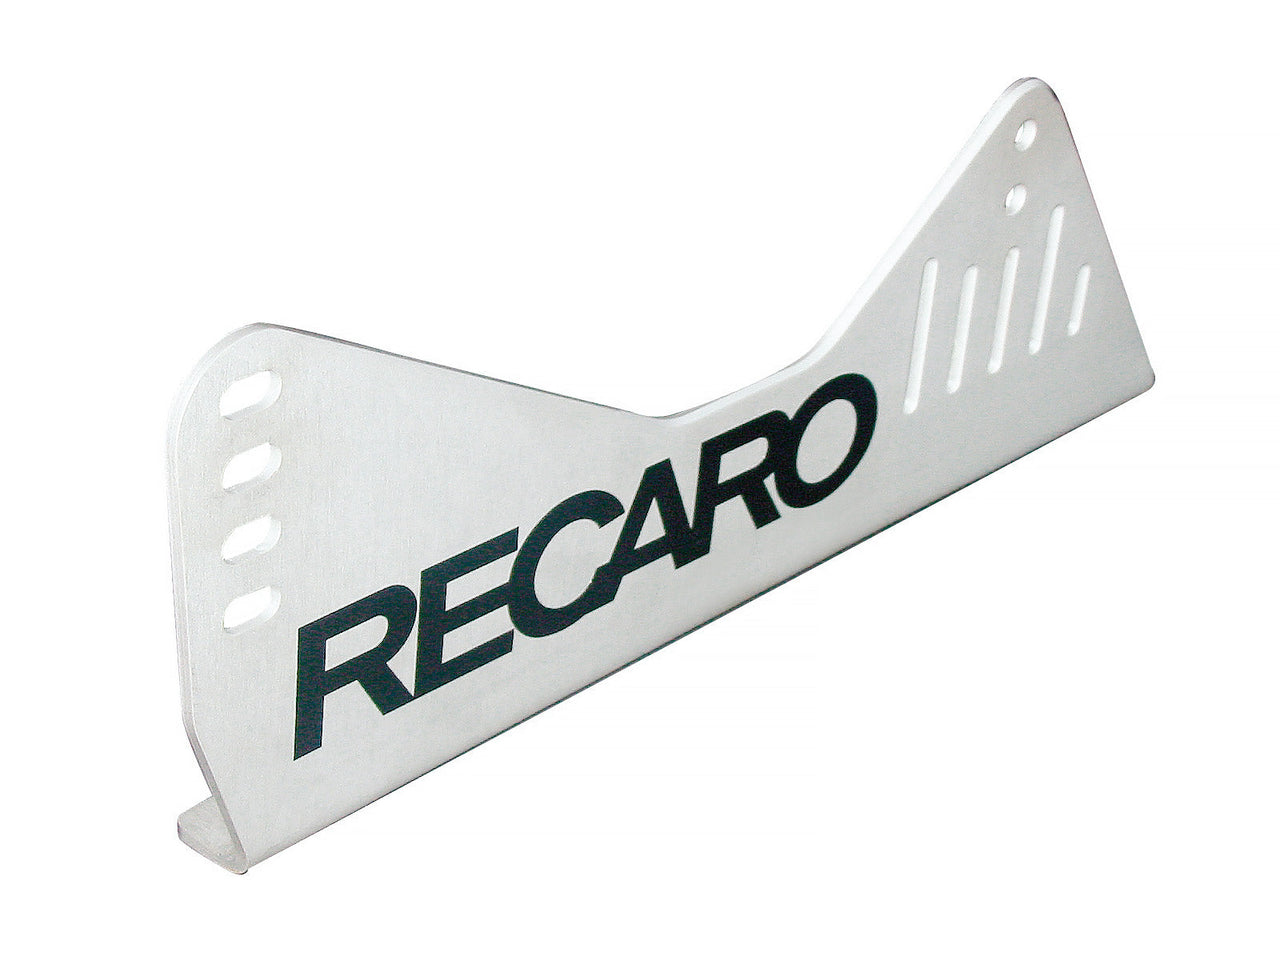 Recaro Aluminum Sidemounts (XL Size)